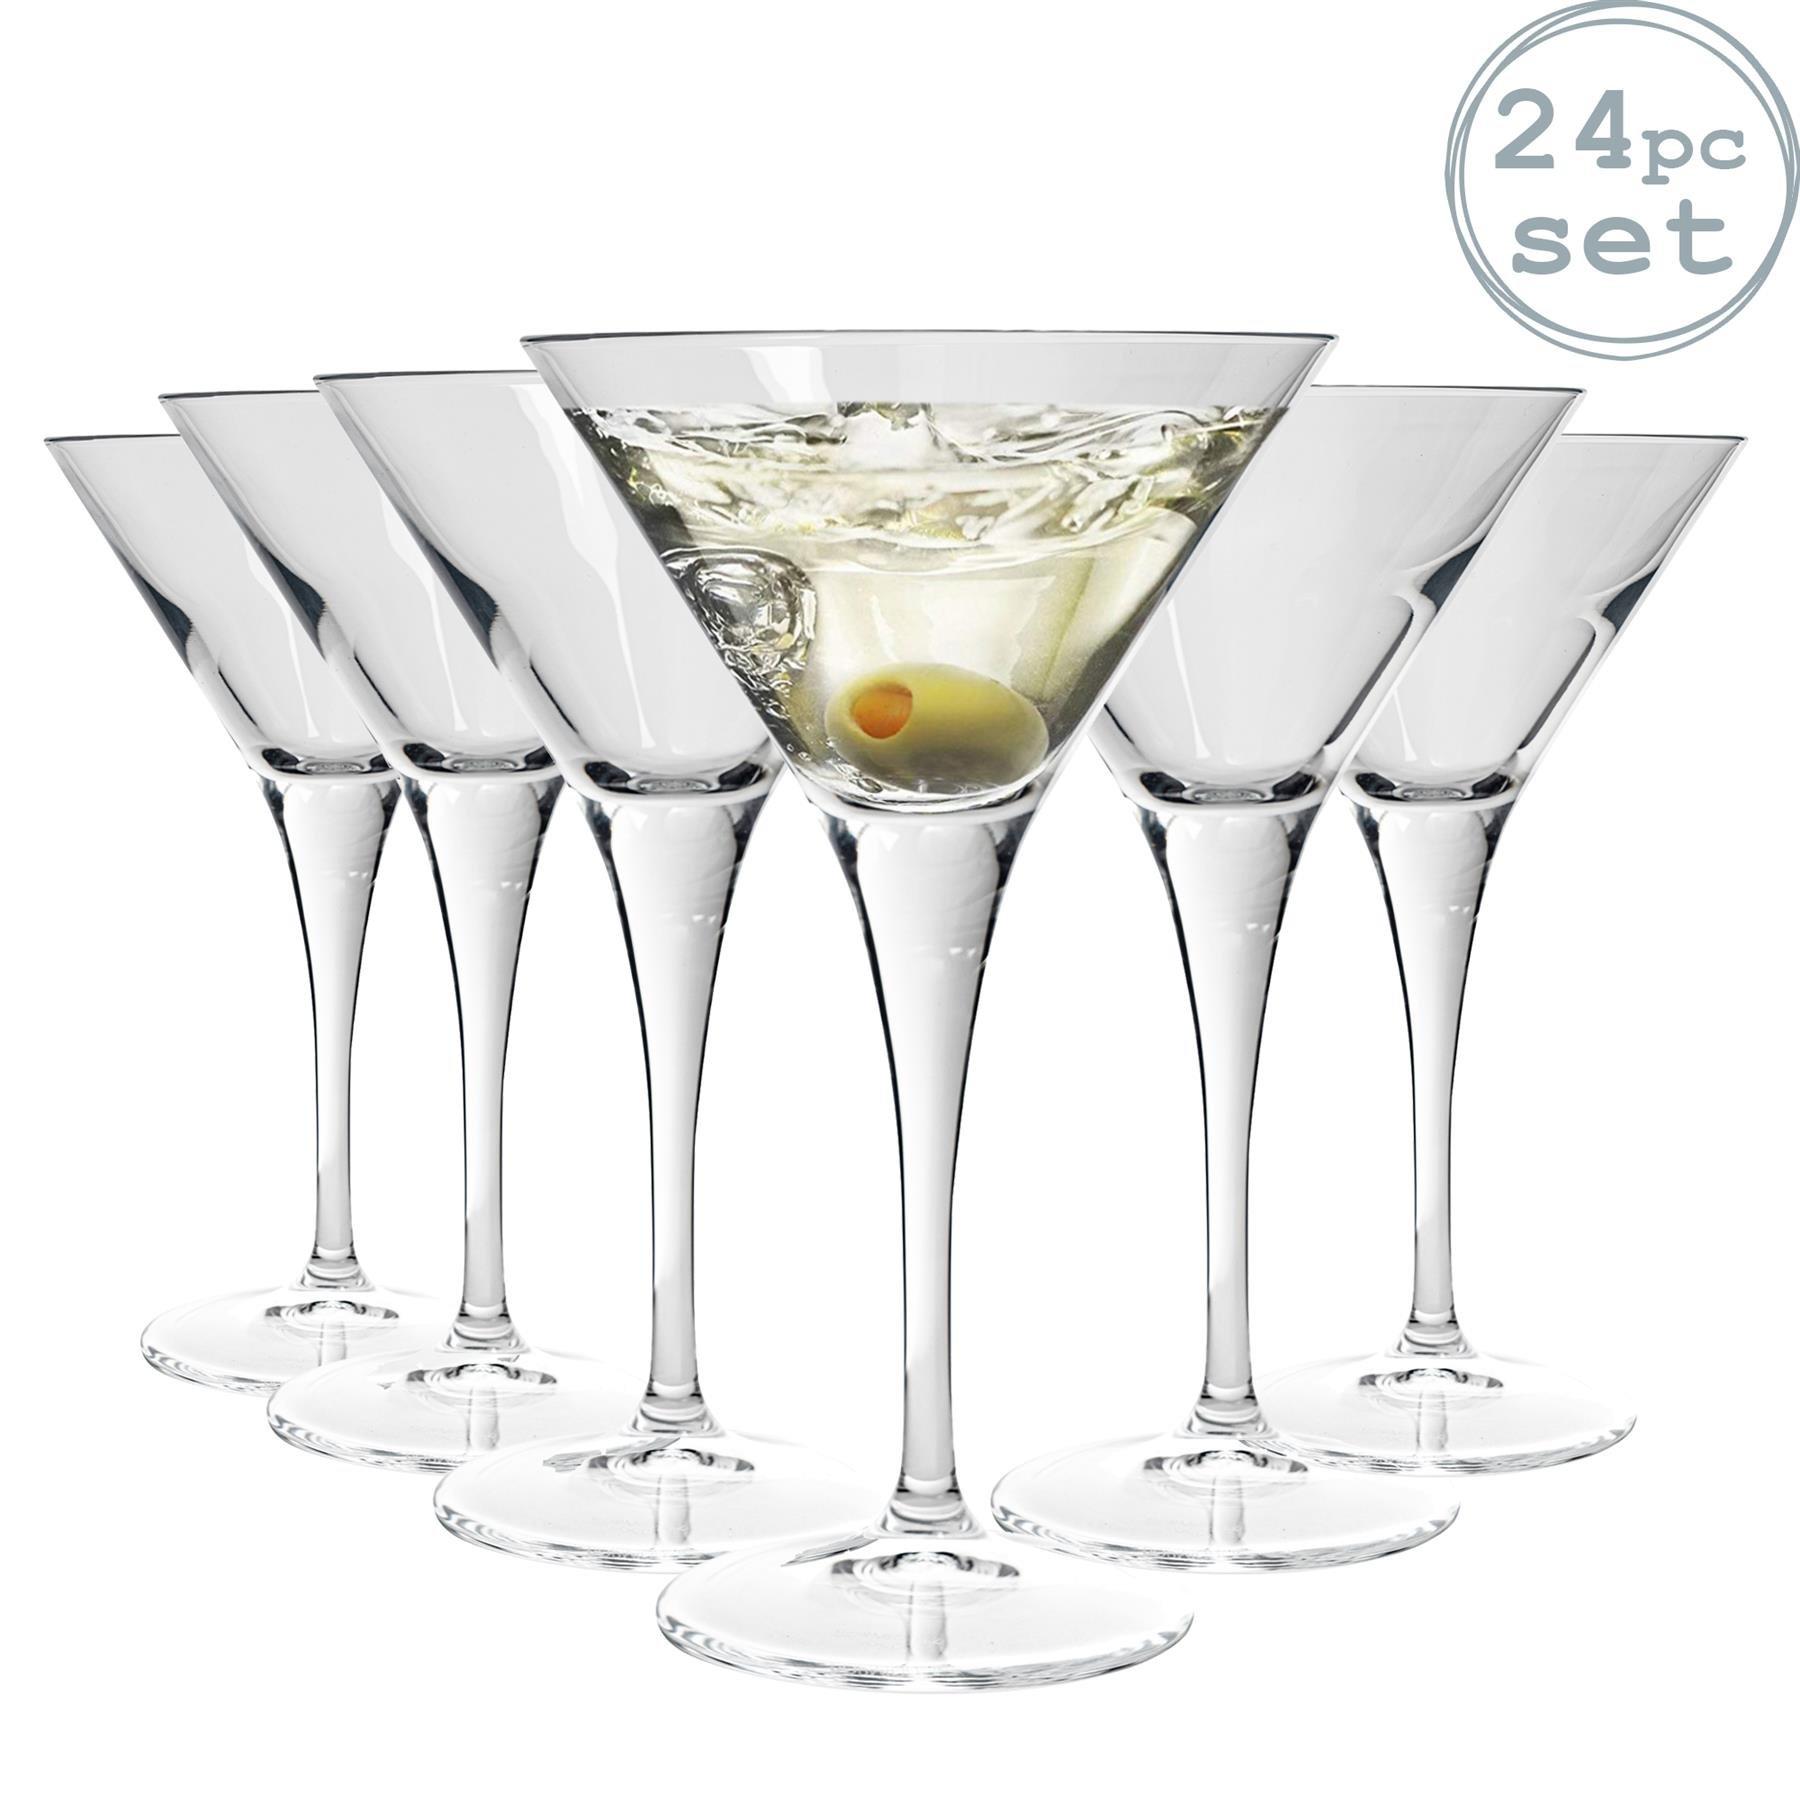 Ypsilon Martini Glass Cocktail Glasses Set - 245ml - Pack of 24